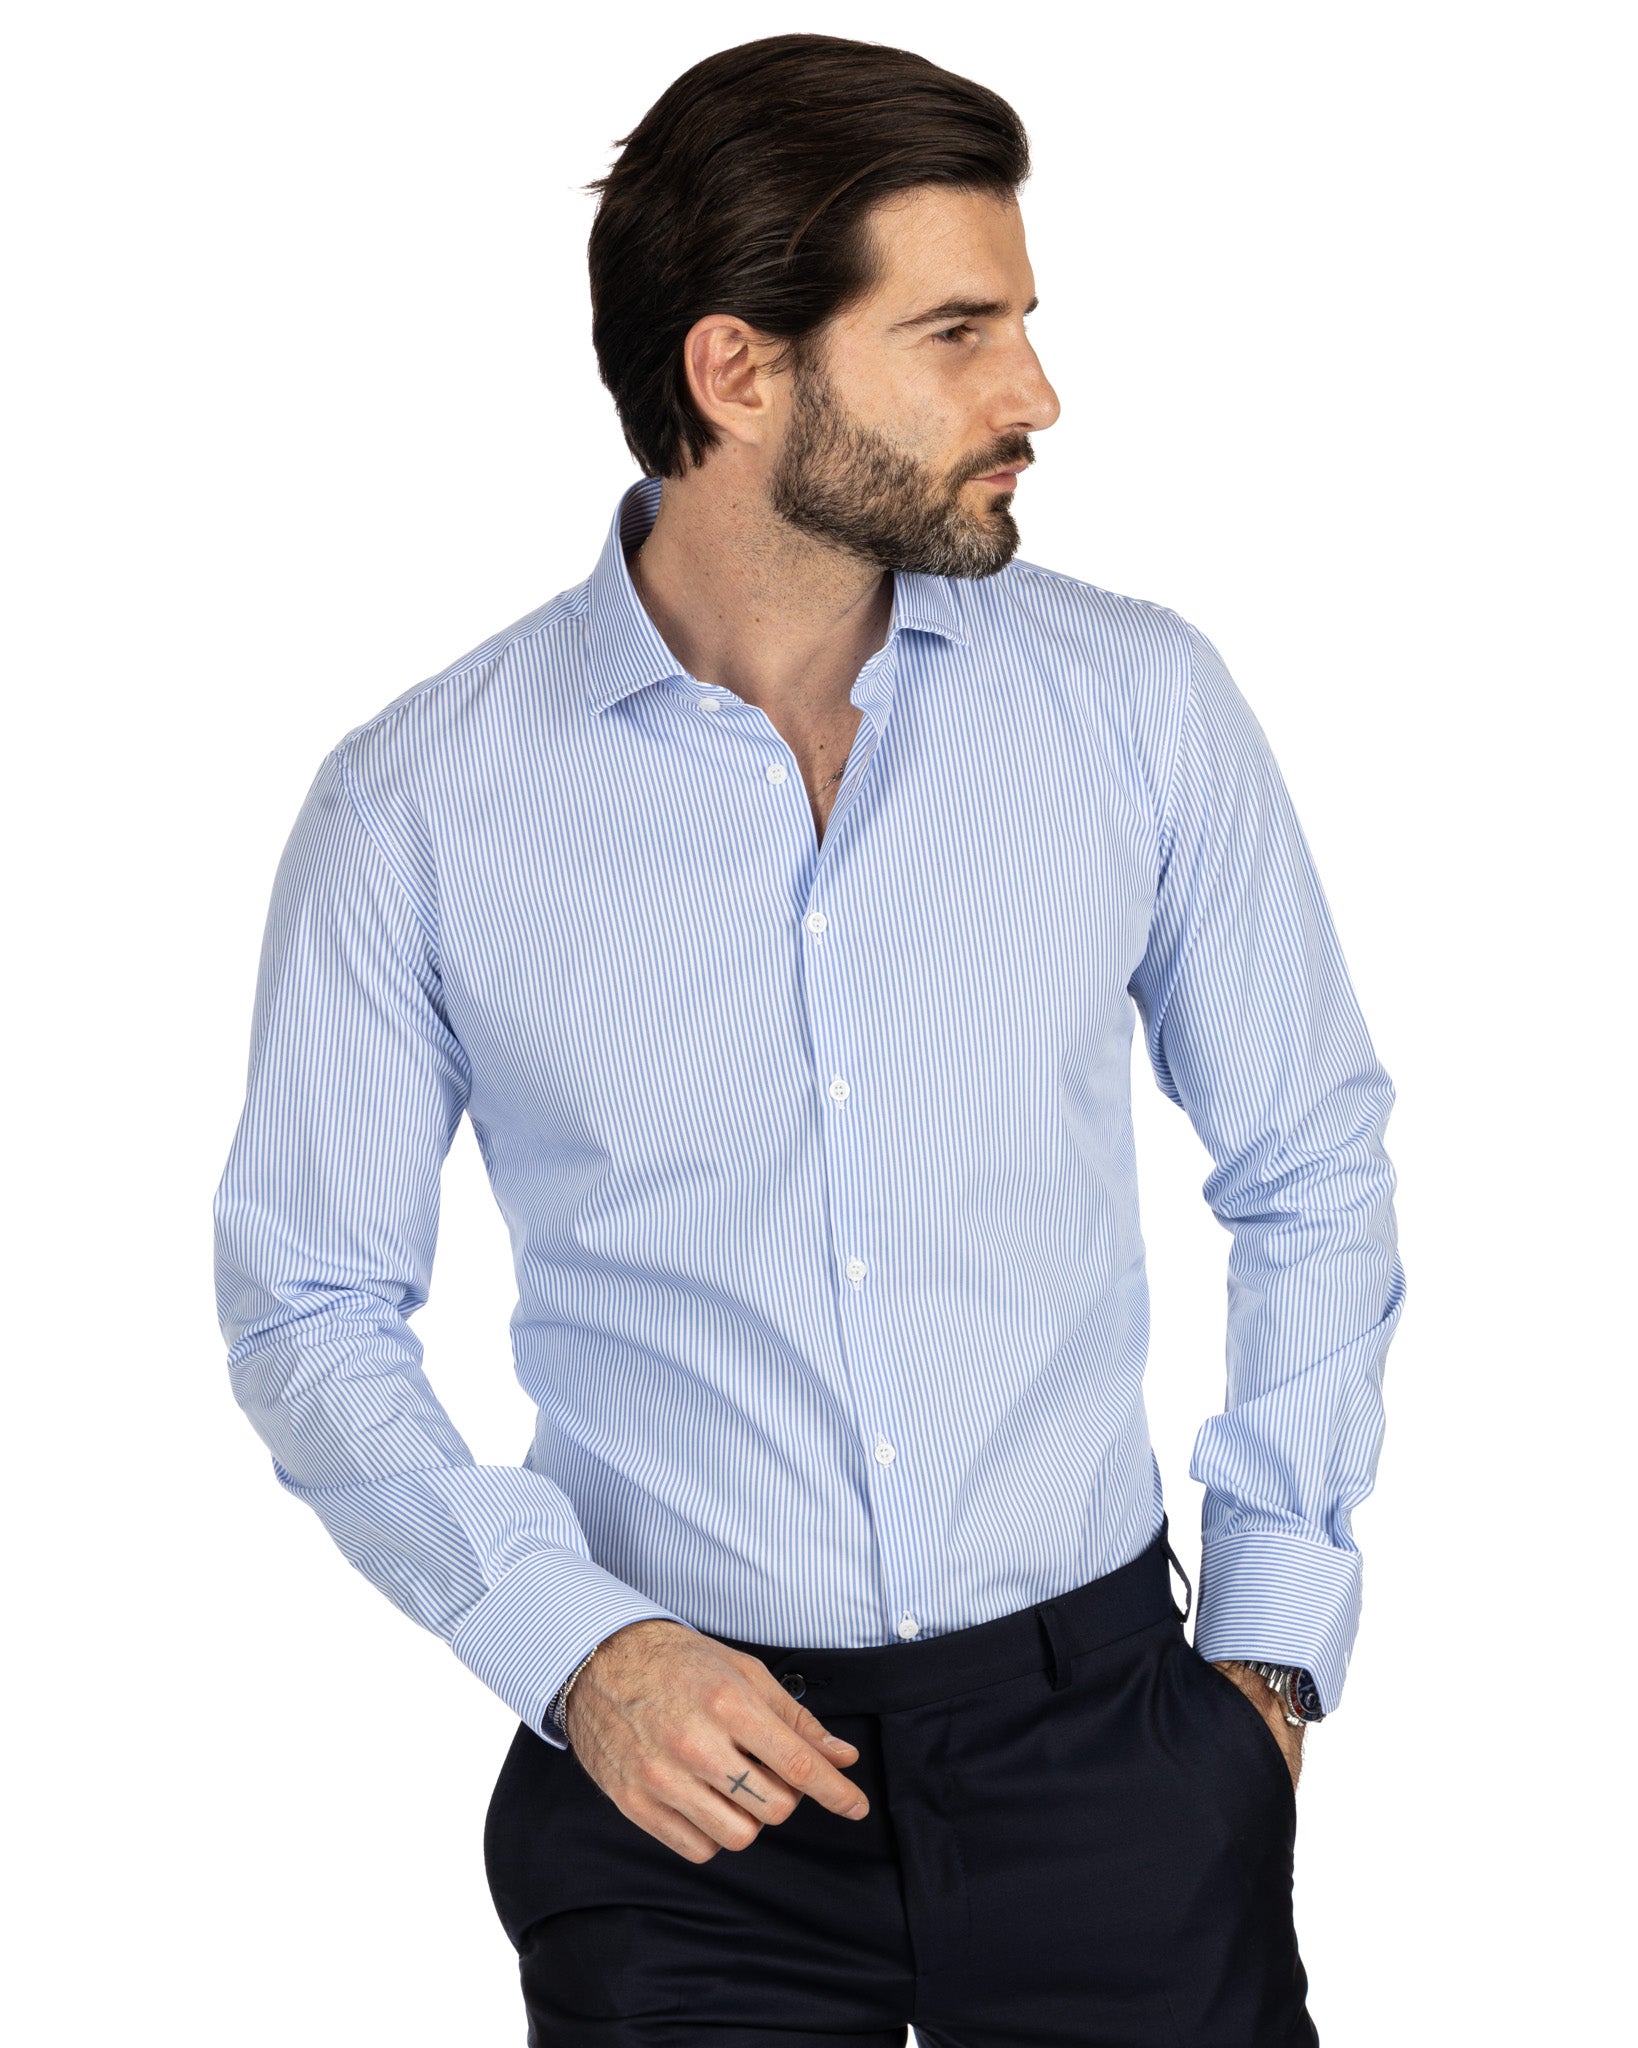 Shirt - light blue slim fit narrow stripe